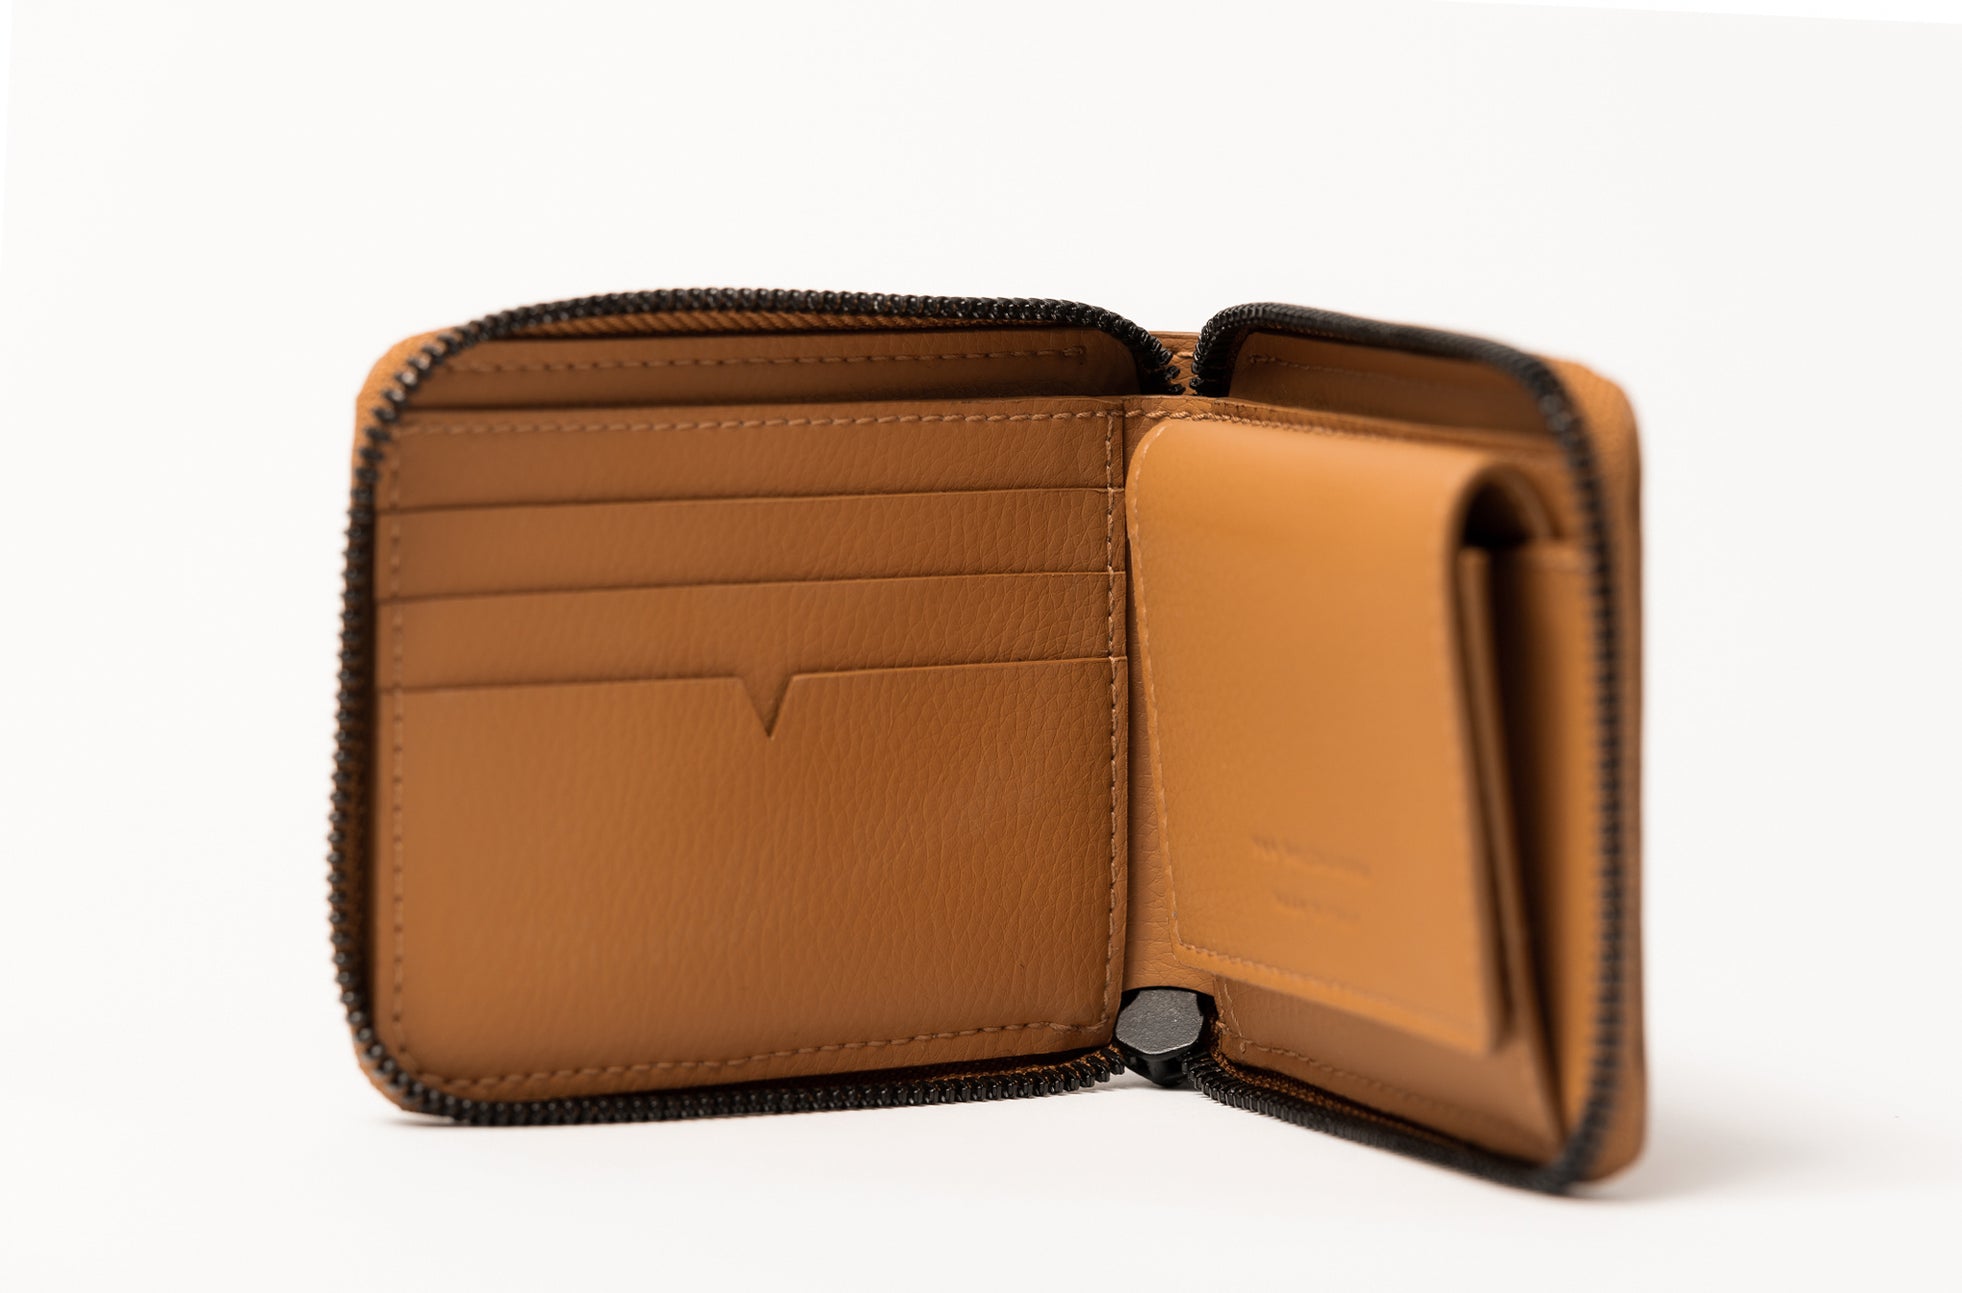 The Zip-Around Wallet in Technik-Leather in Caramel image 6